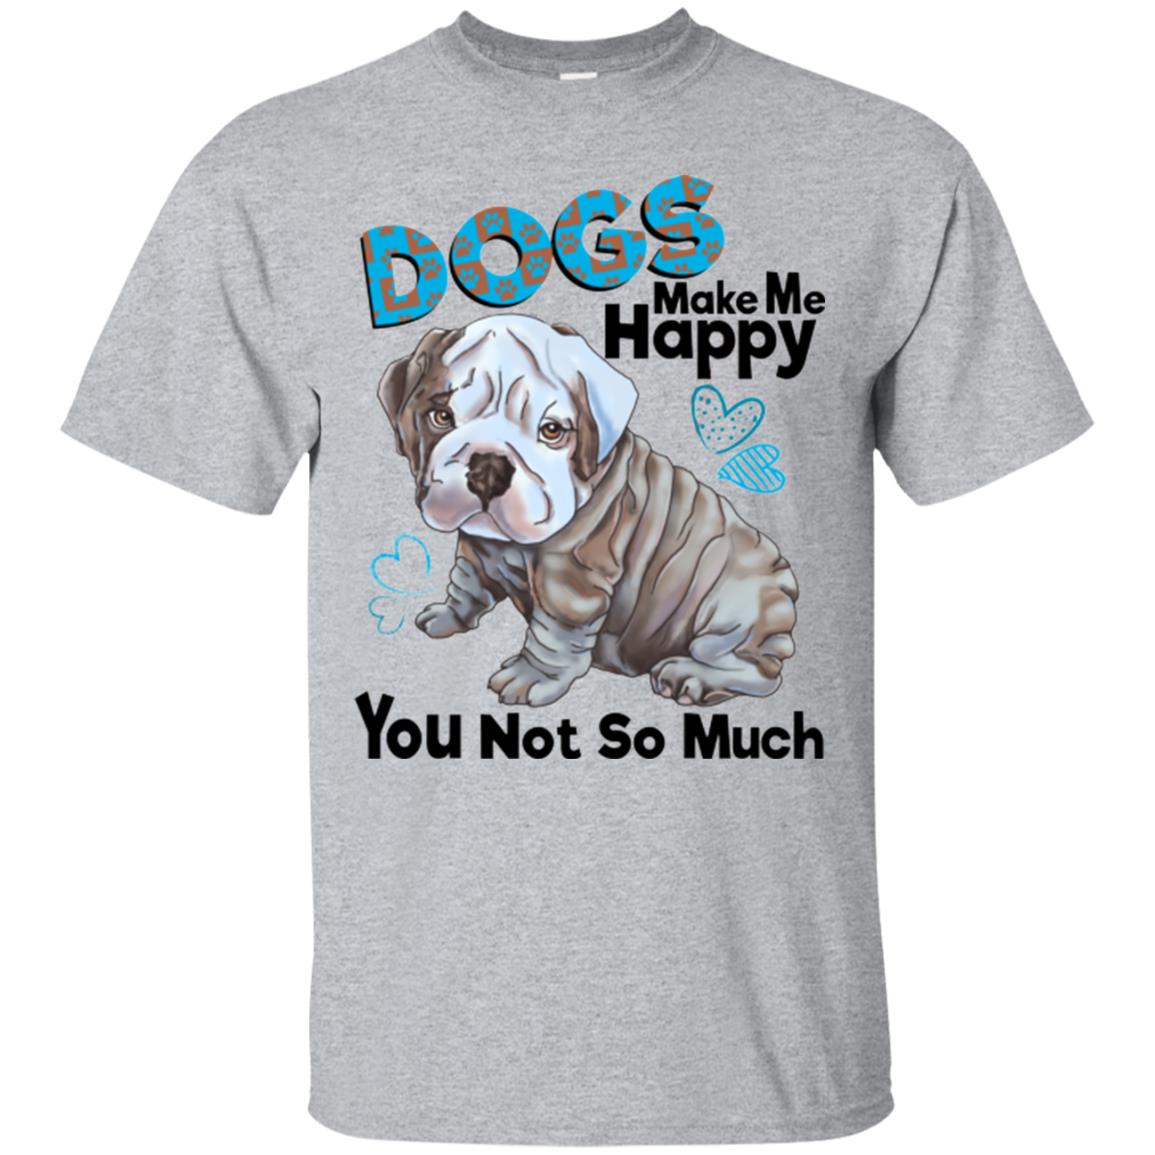 English bulldog T-shirt for Men, Women, Dogs Make Me Happy - GoneBold.gift